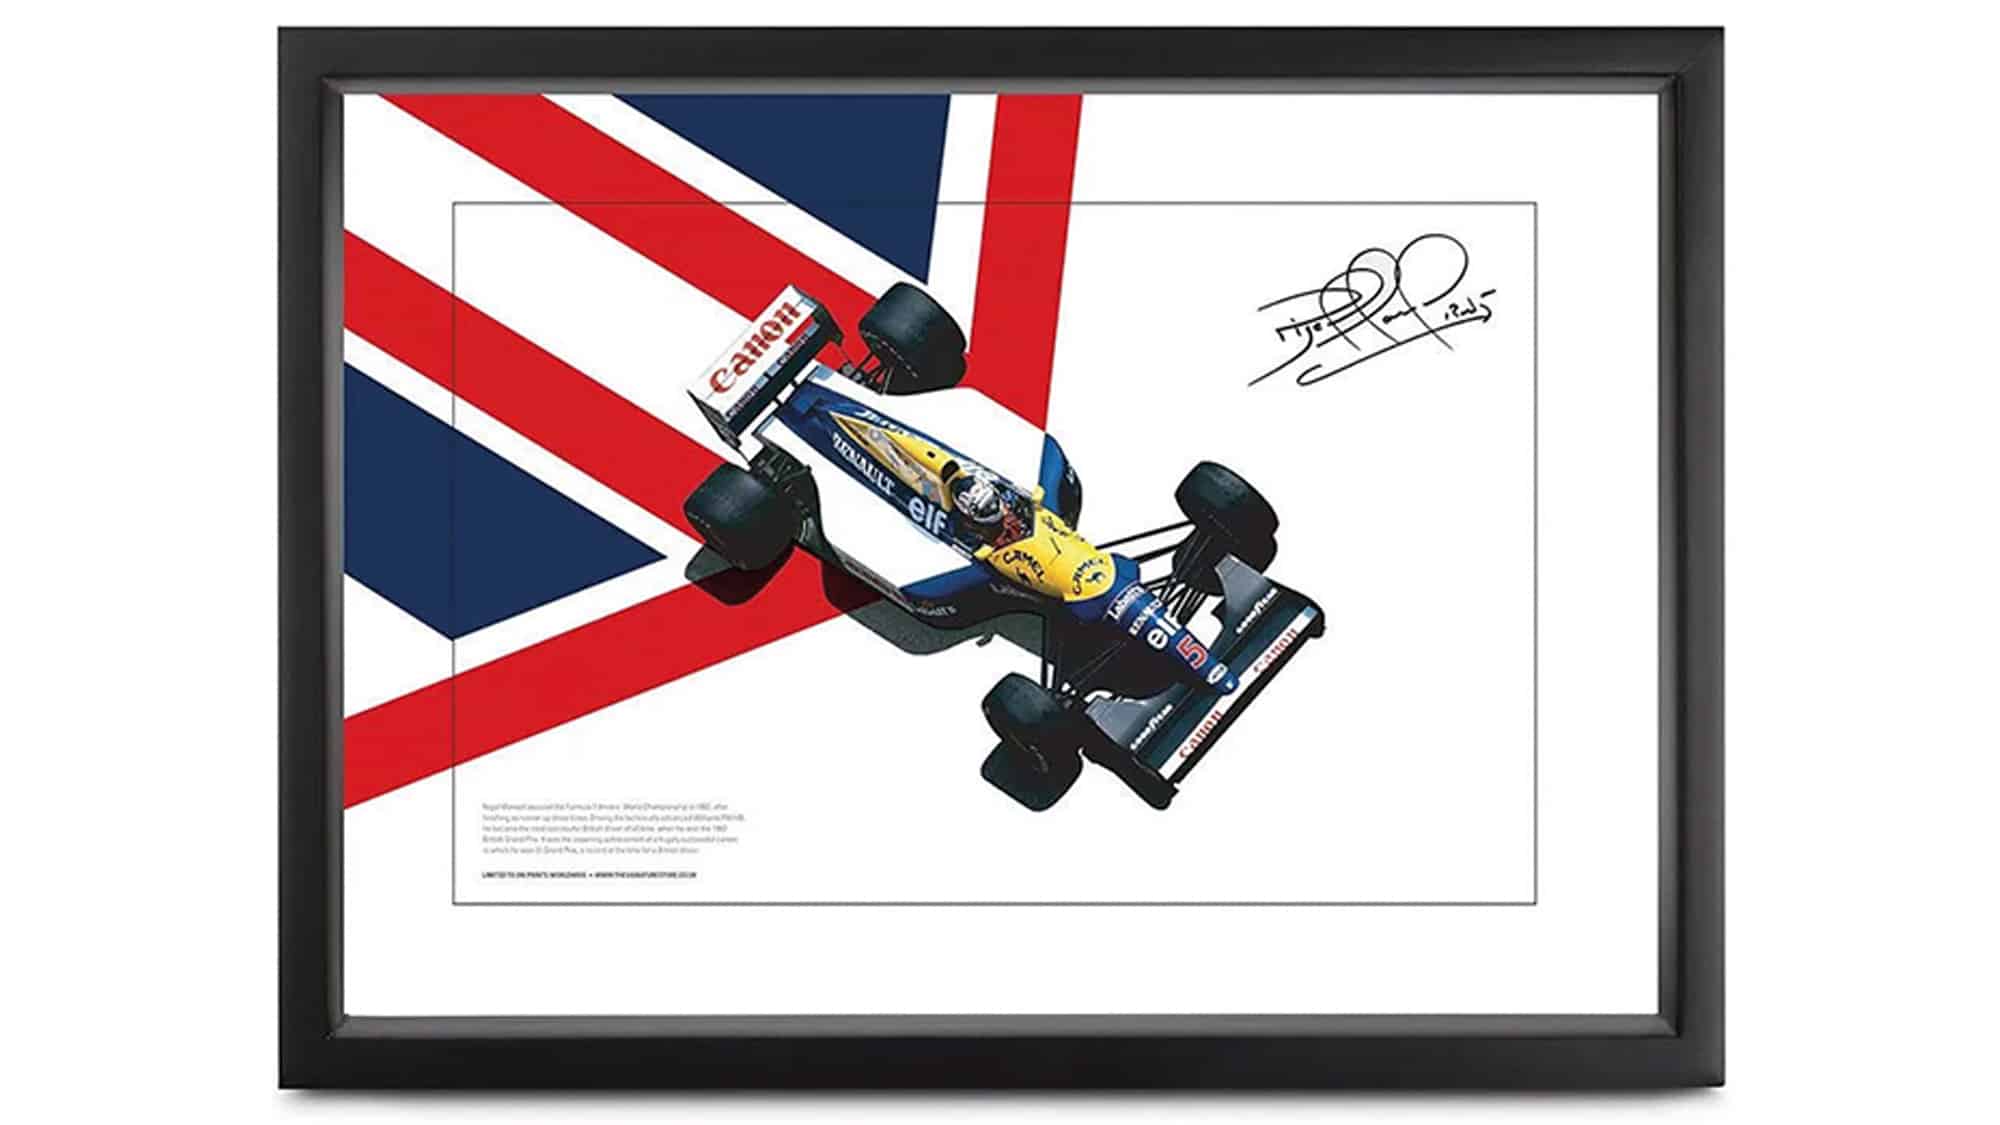 Nigel Mansell signed image